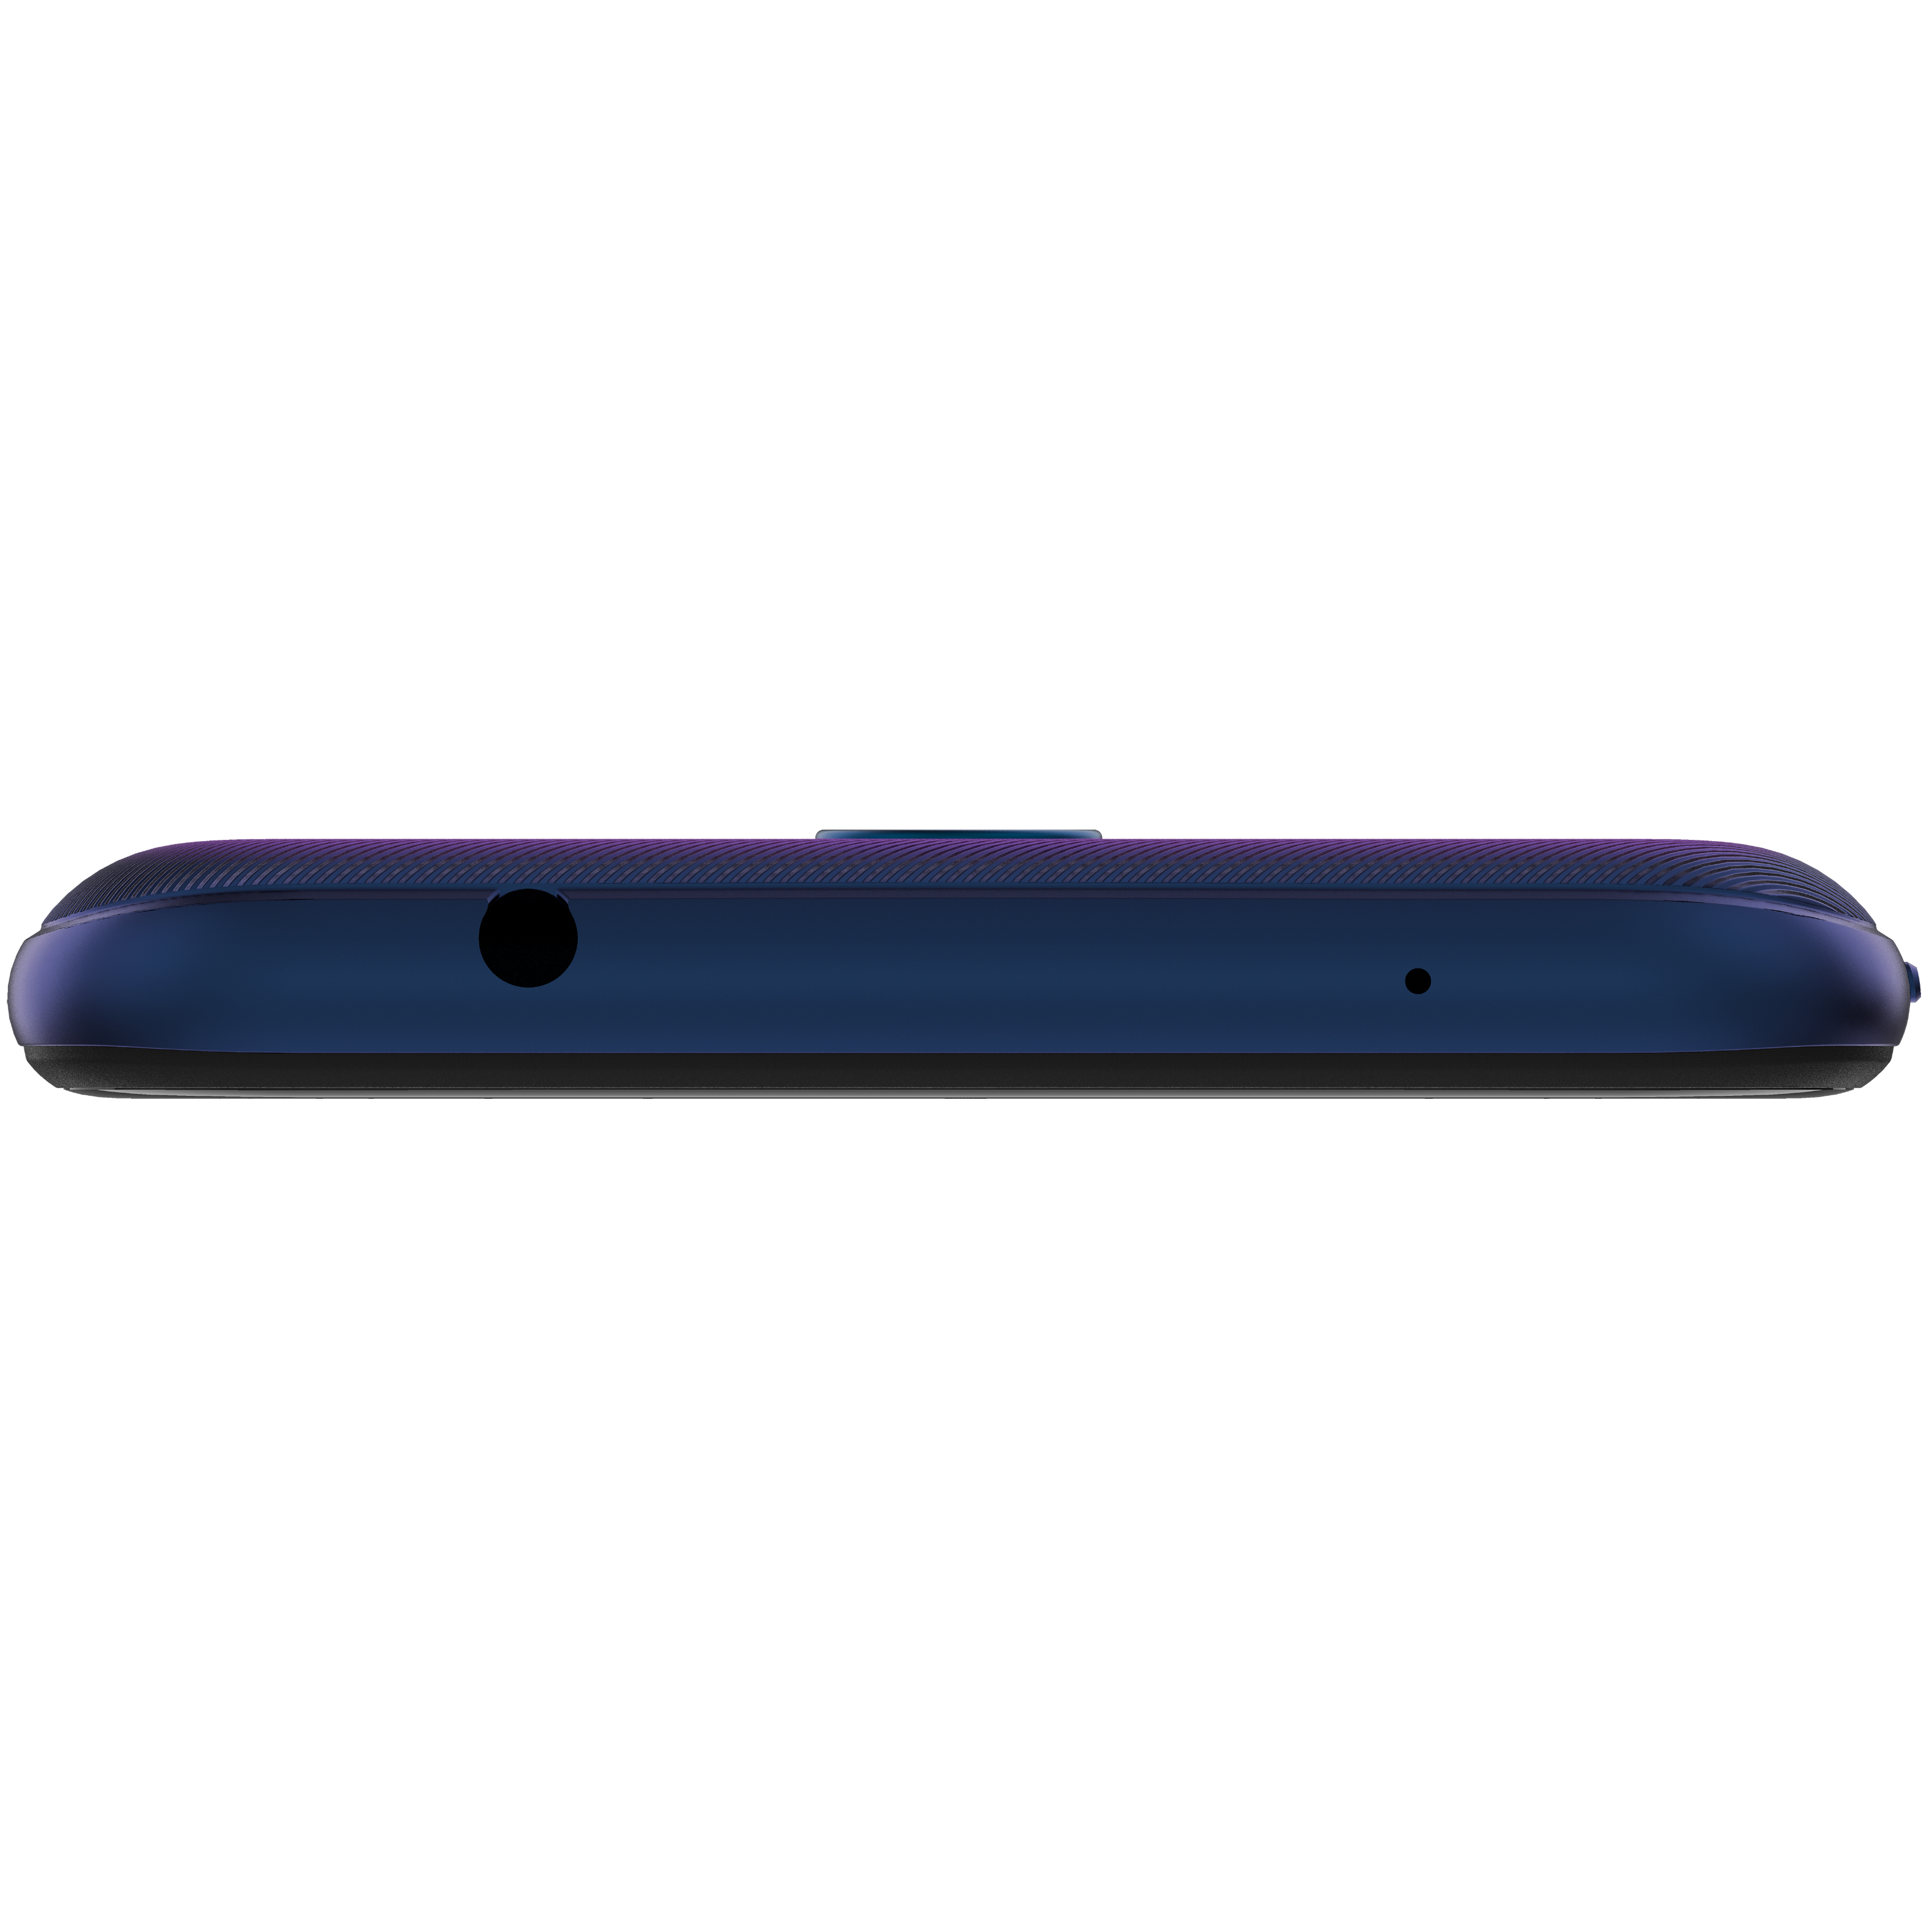 AT&T Calypso, 16GB, Chameleon Blue - Prepaid Smartphone - image 18 of 19